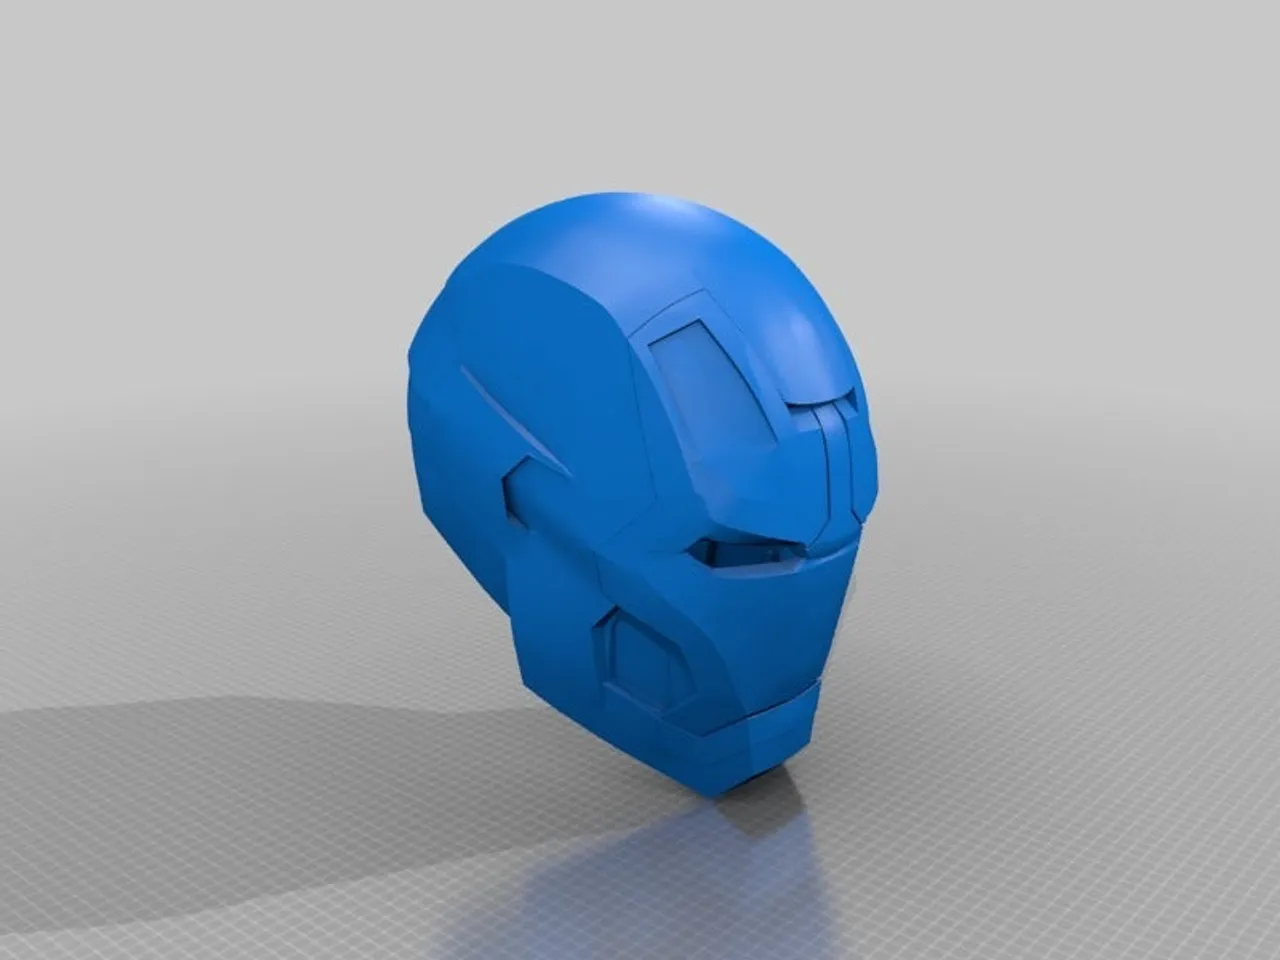 IronMan 3D Model by 9aFilms on DeviantArt